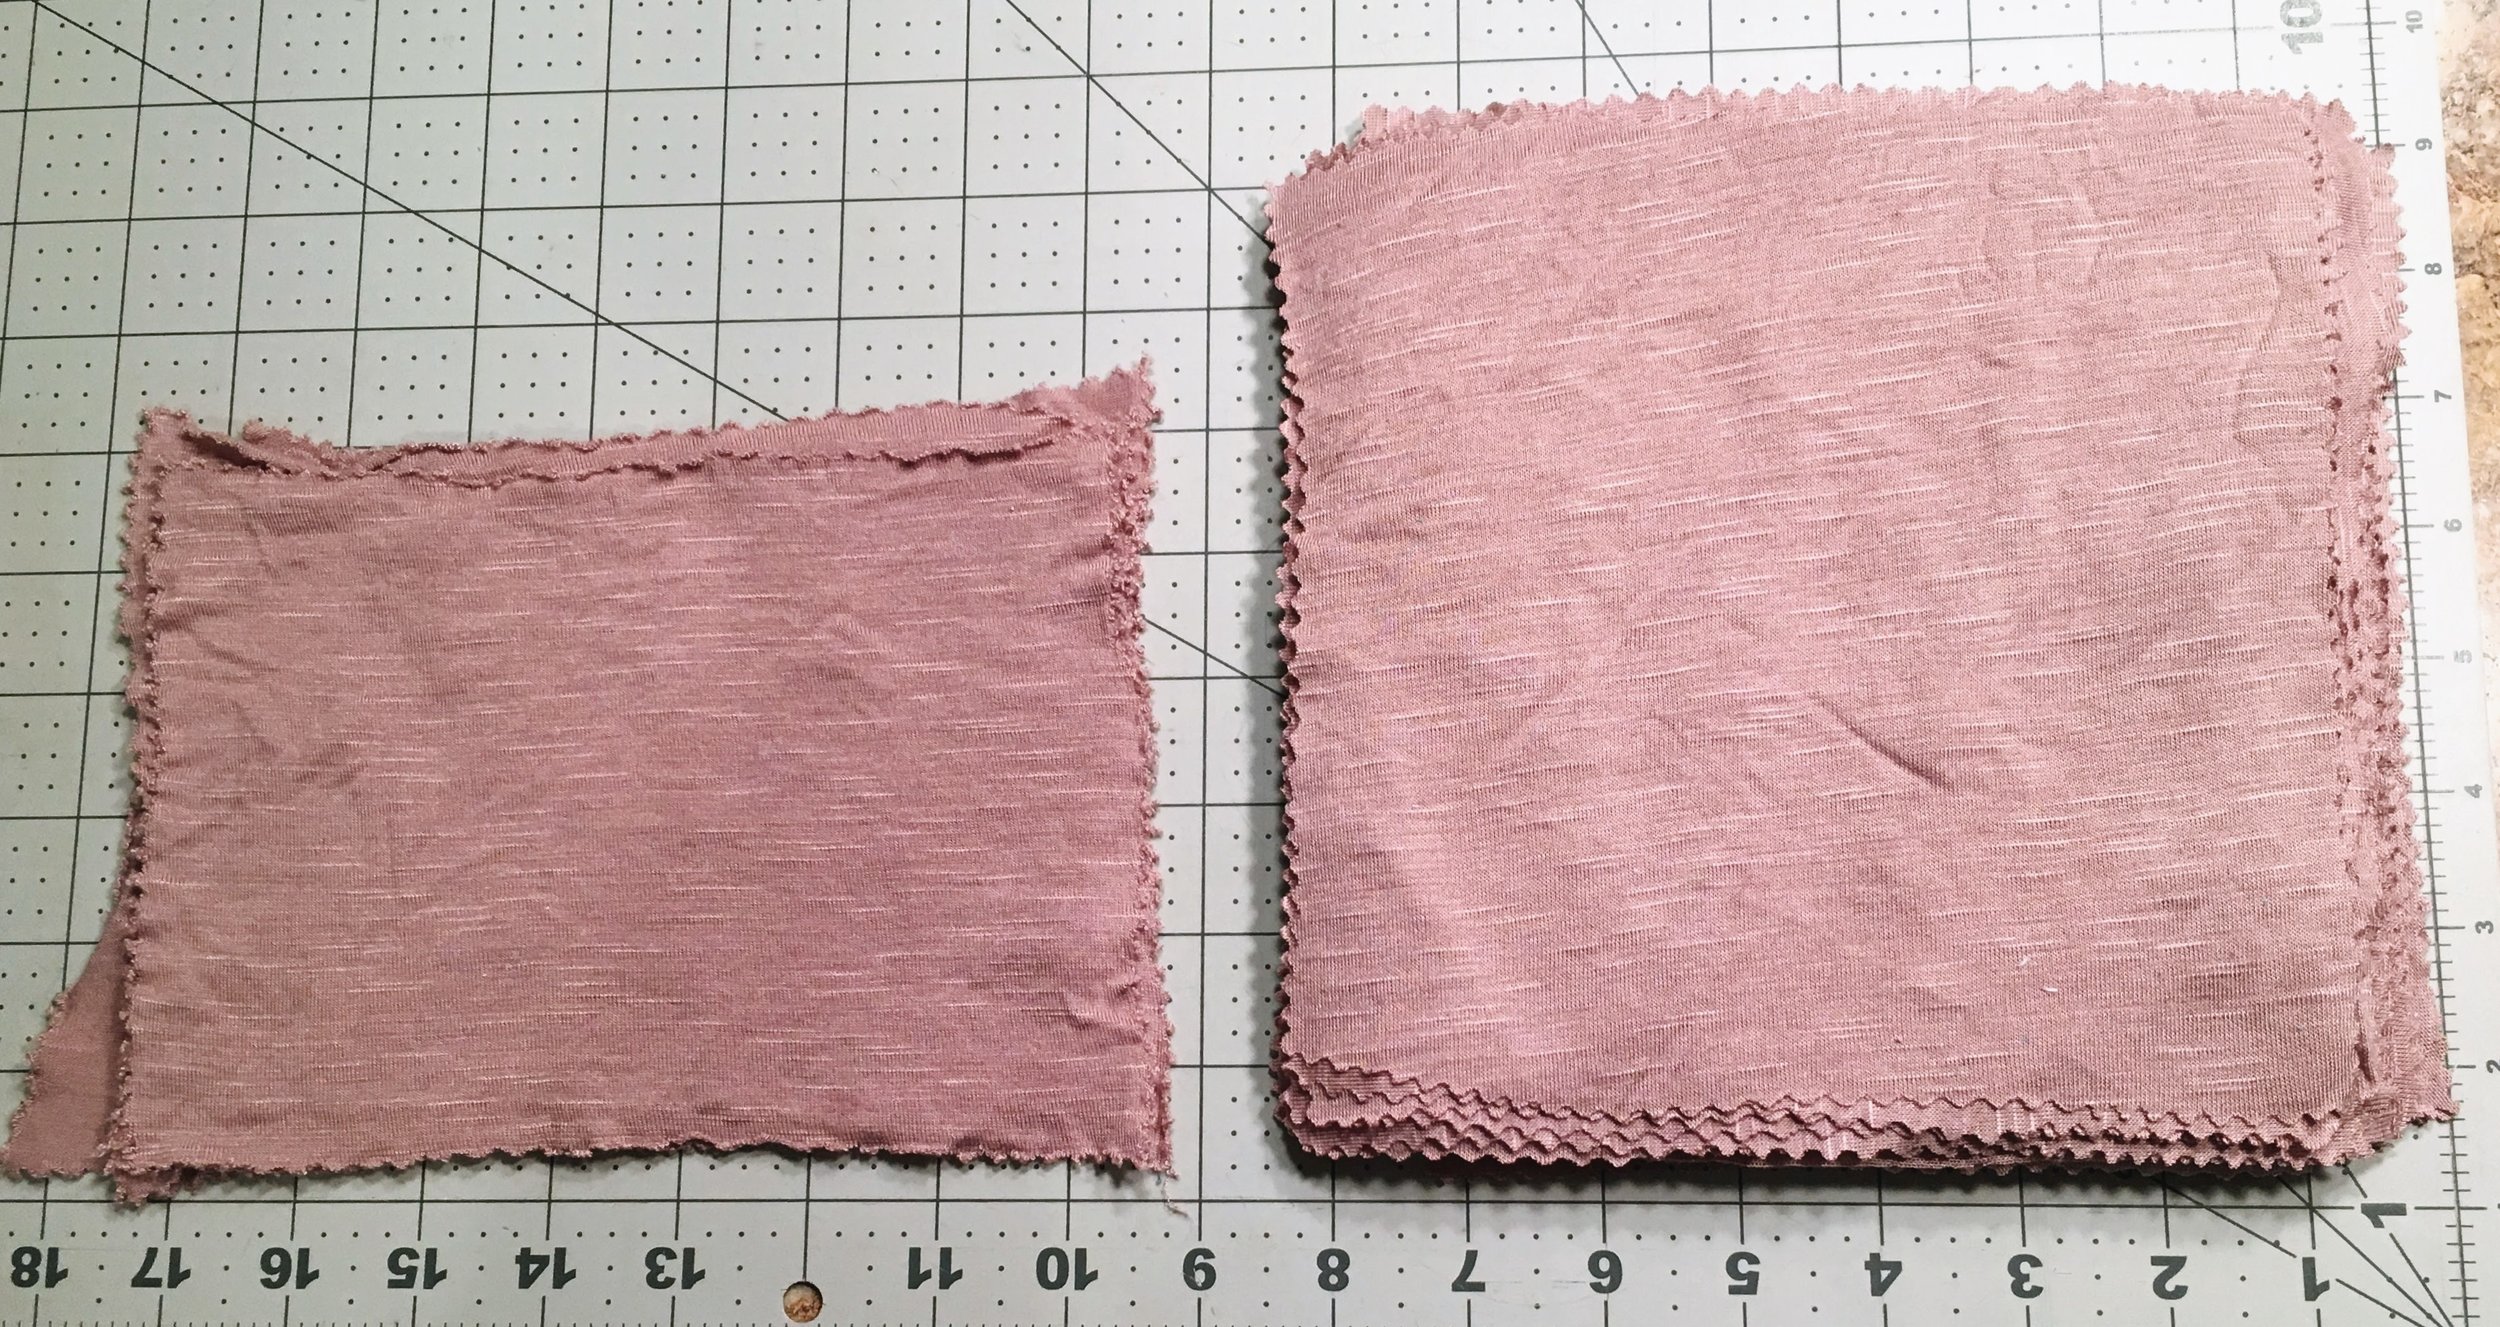 How to Make a Handkerchief - Easiest Method